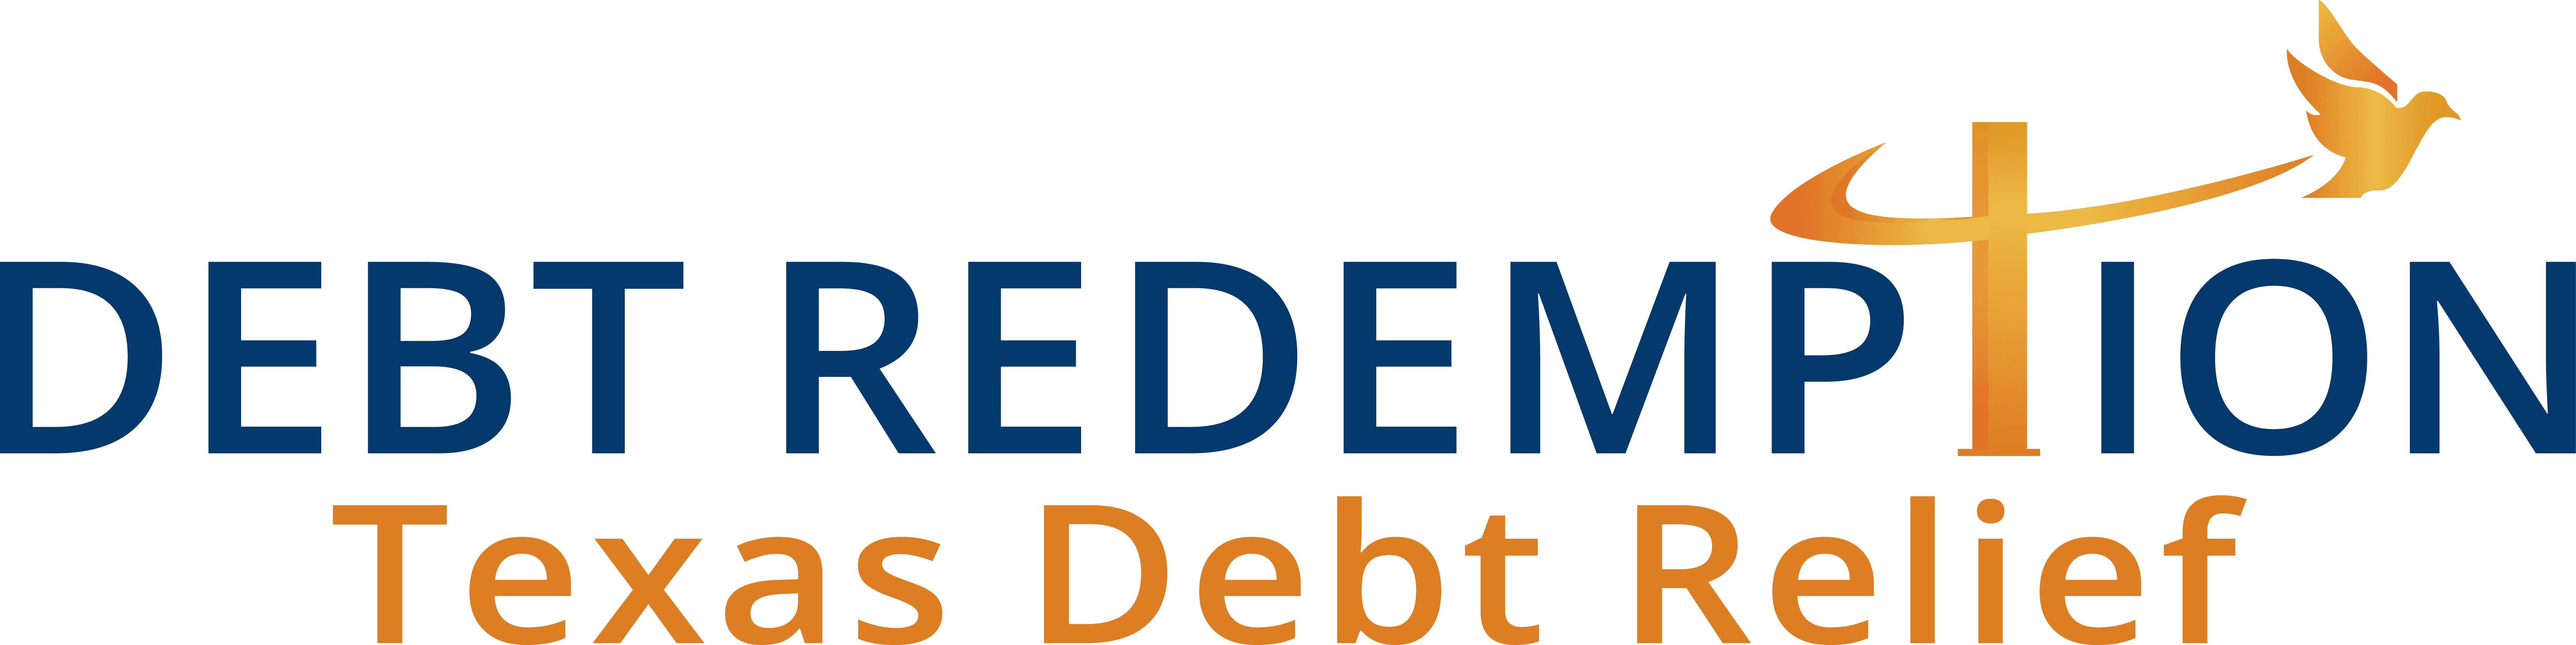 Debt Consolidation Austin Texas and Debt Relief Austin Texas